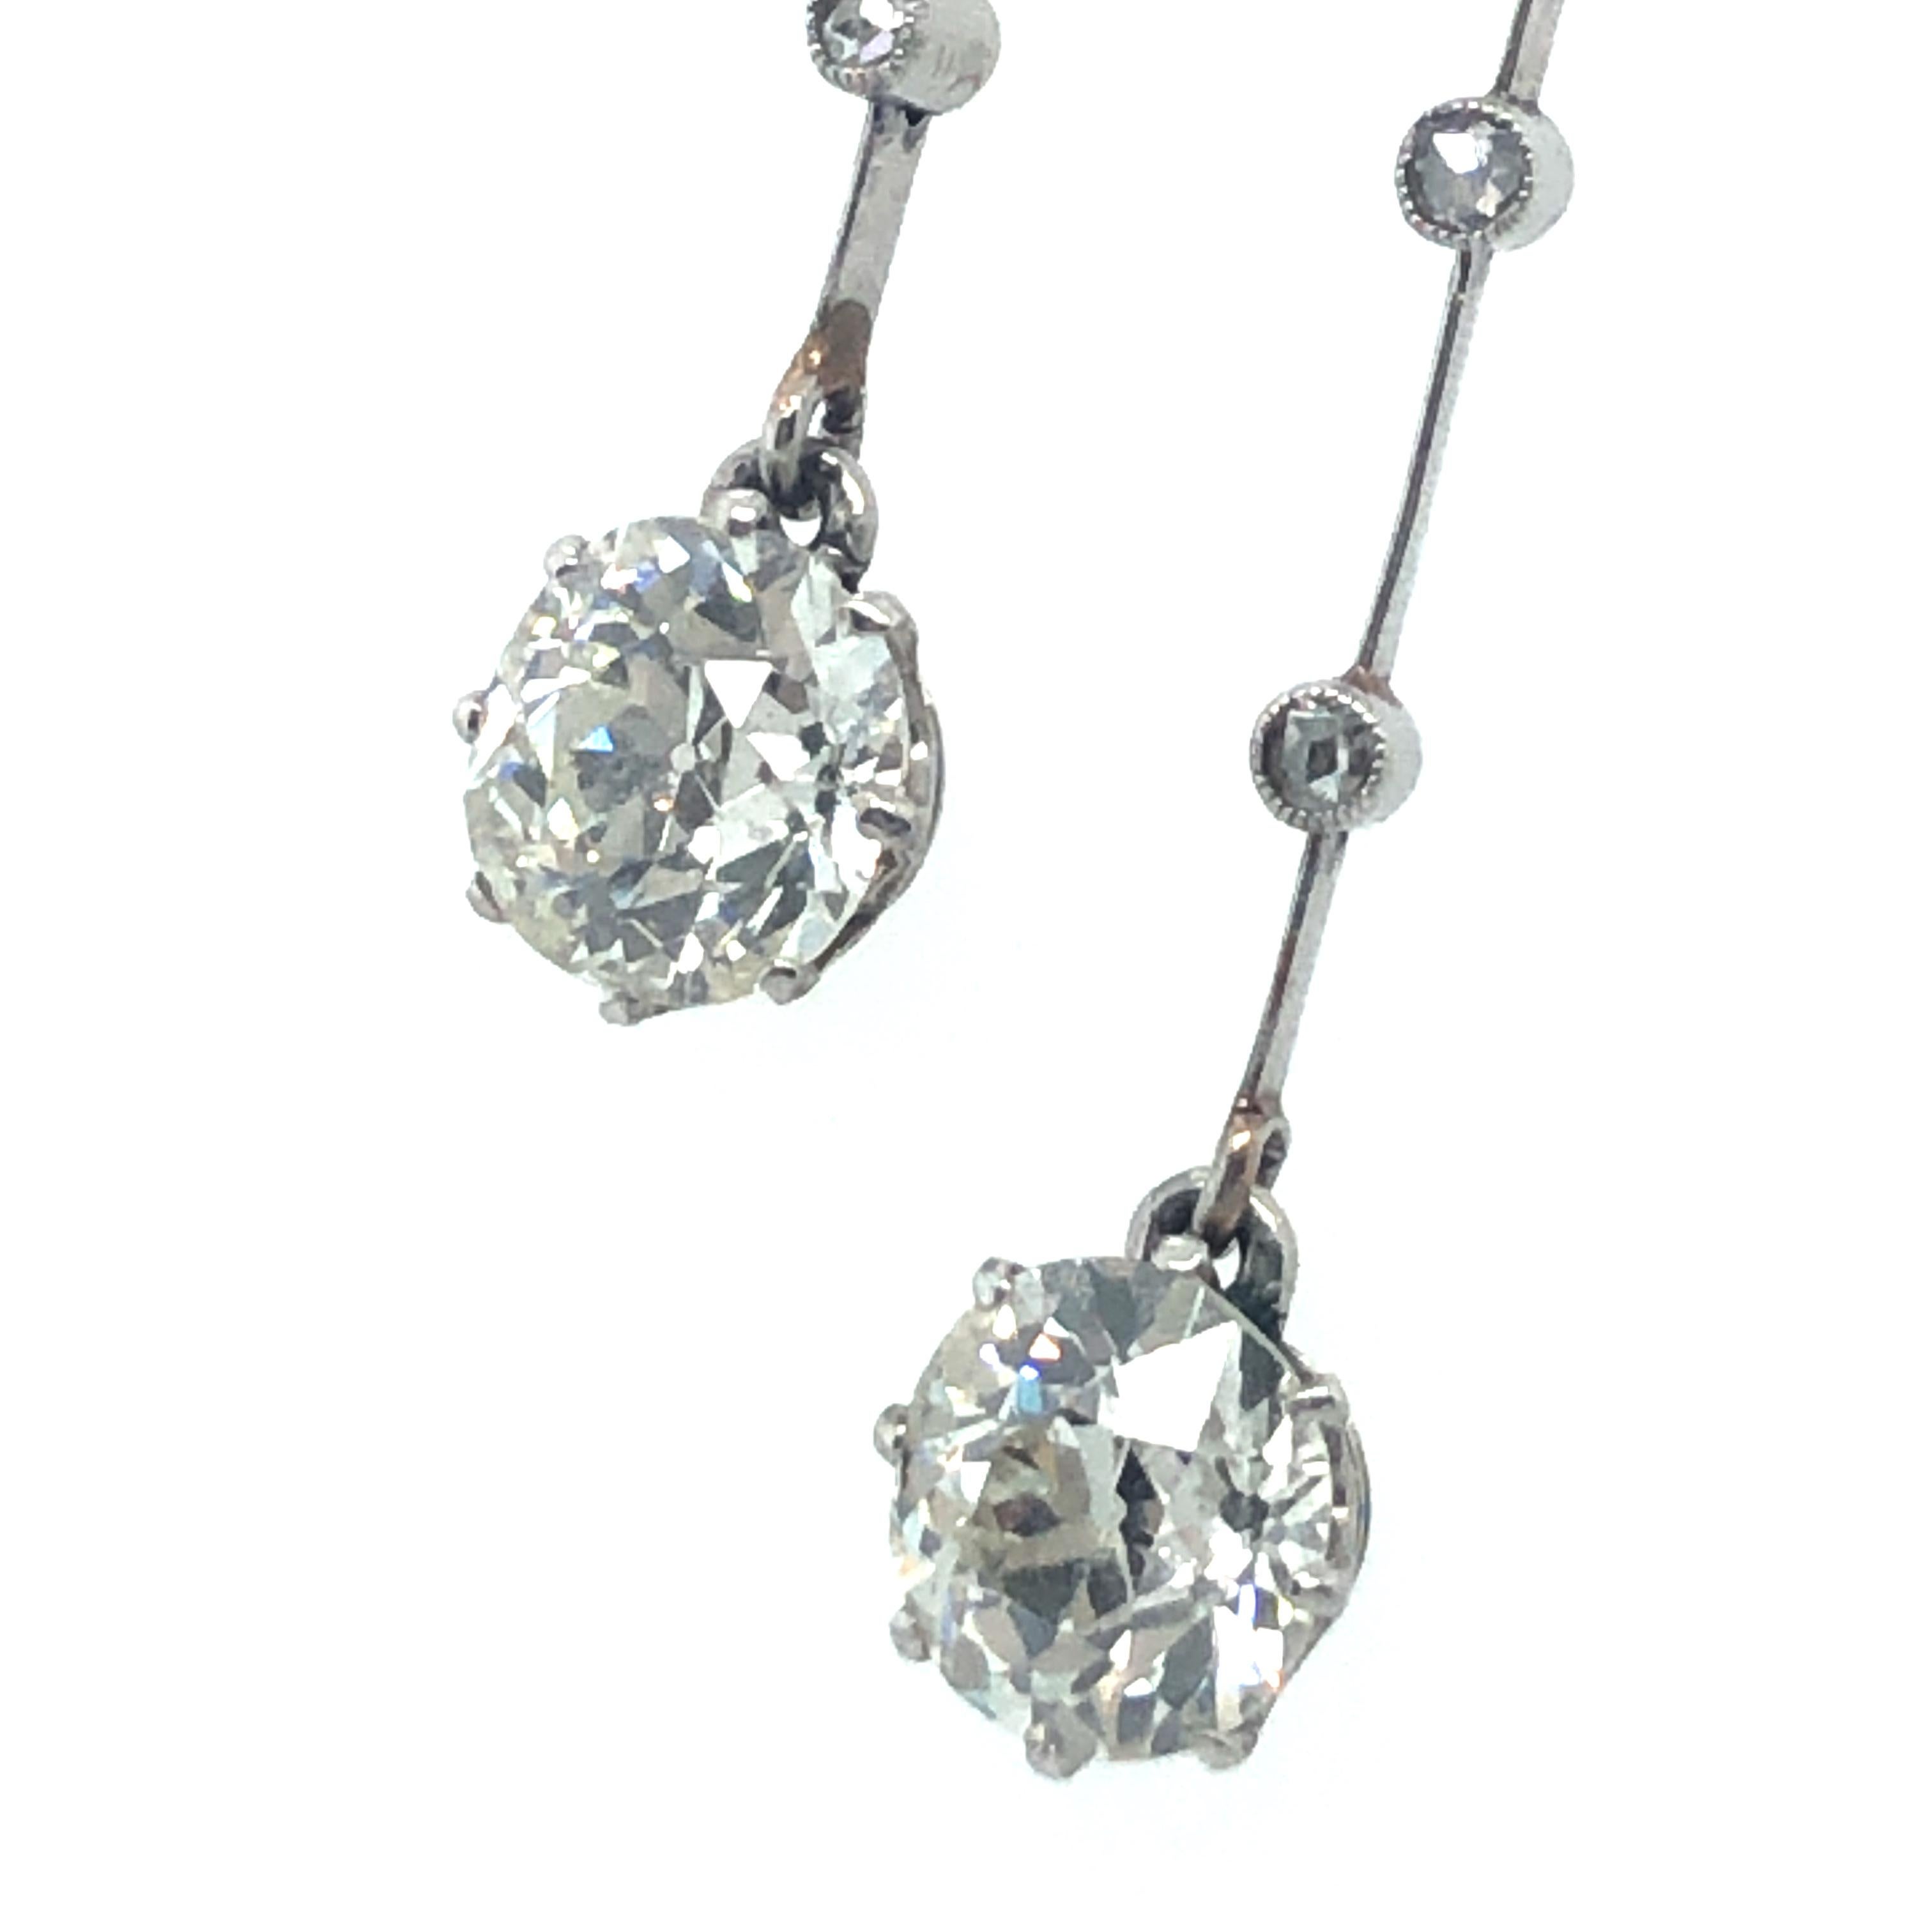 Gorgeous Belle Époque Négligée Diamond Necklace in Platinum 950 In Good Condition For Sale In Lucerne, CH